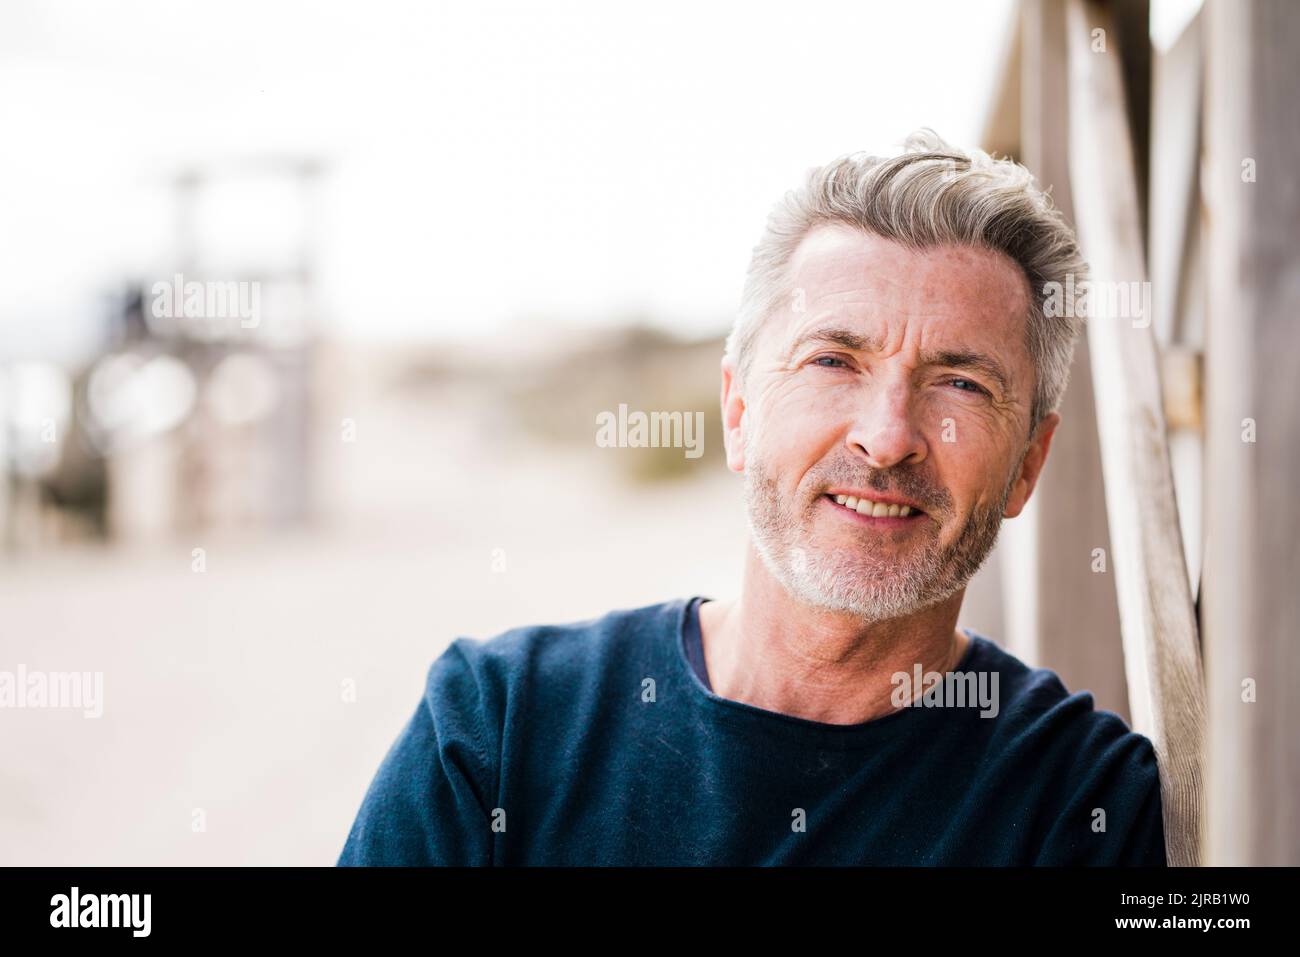 Happy mature man with gray hair at beach Stock Photo